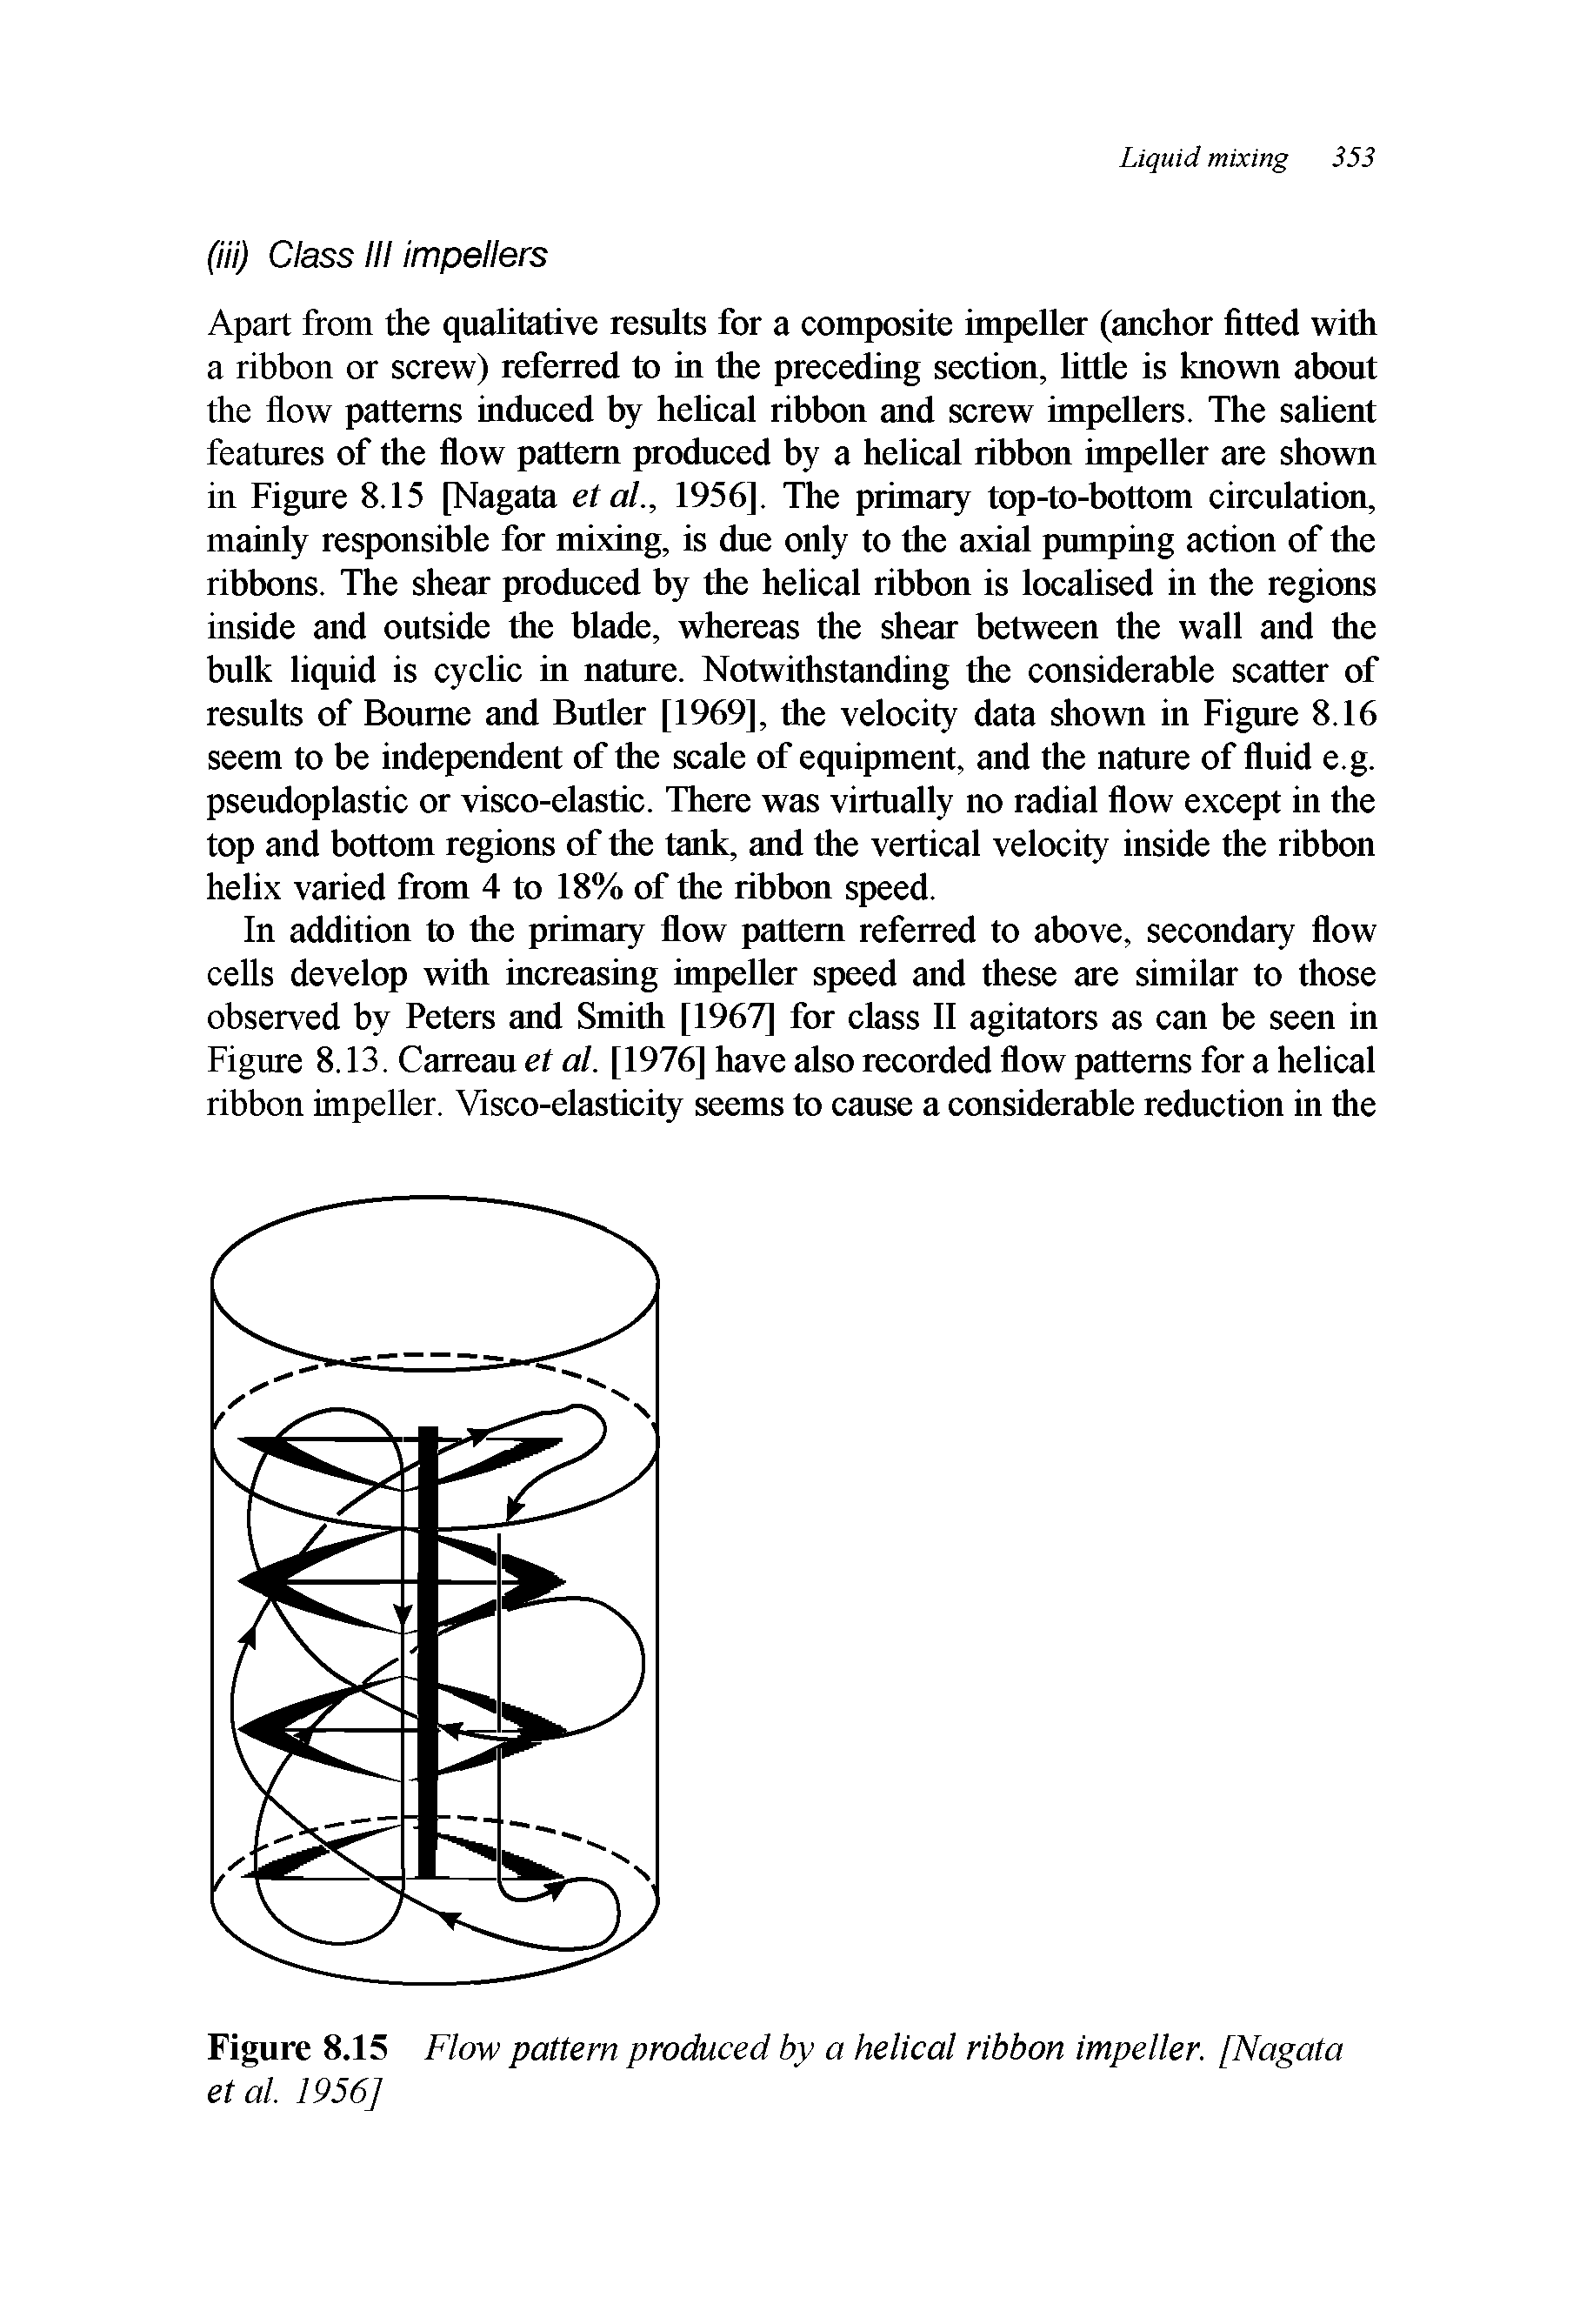 Figure 8.15 Flow pattern produced by a helical ribbon impeller. [Nagata et al. 1956]...